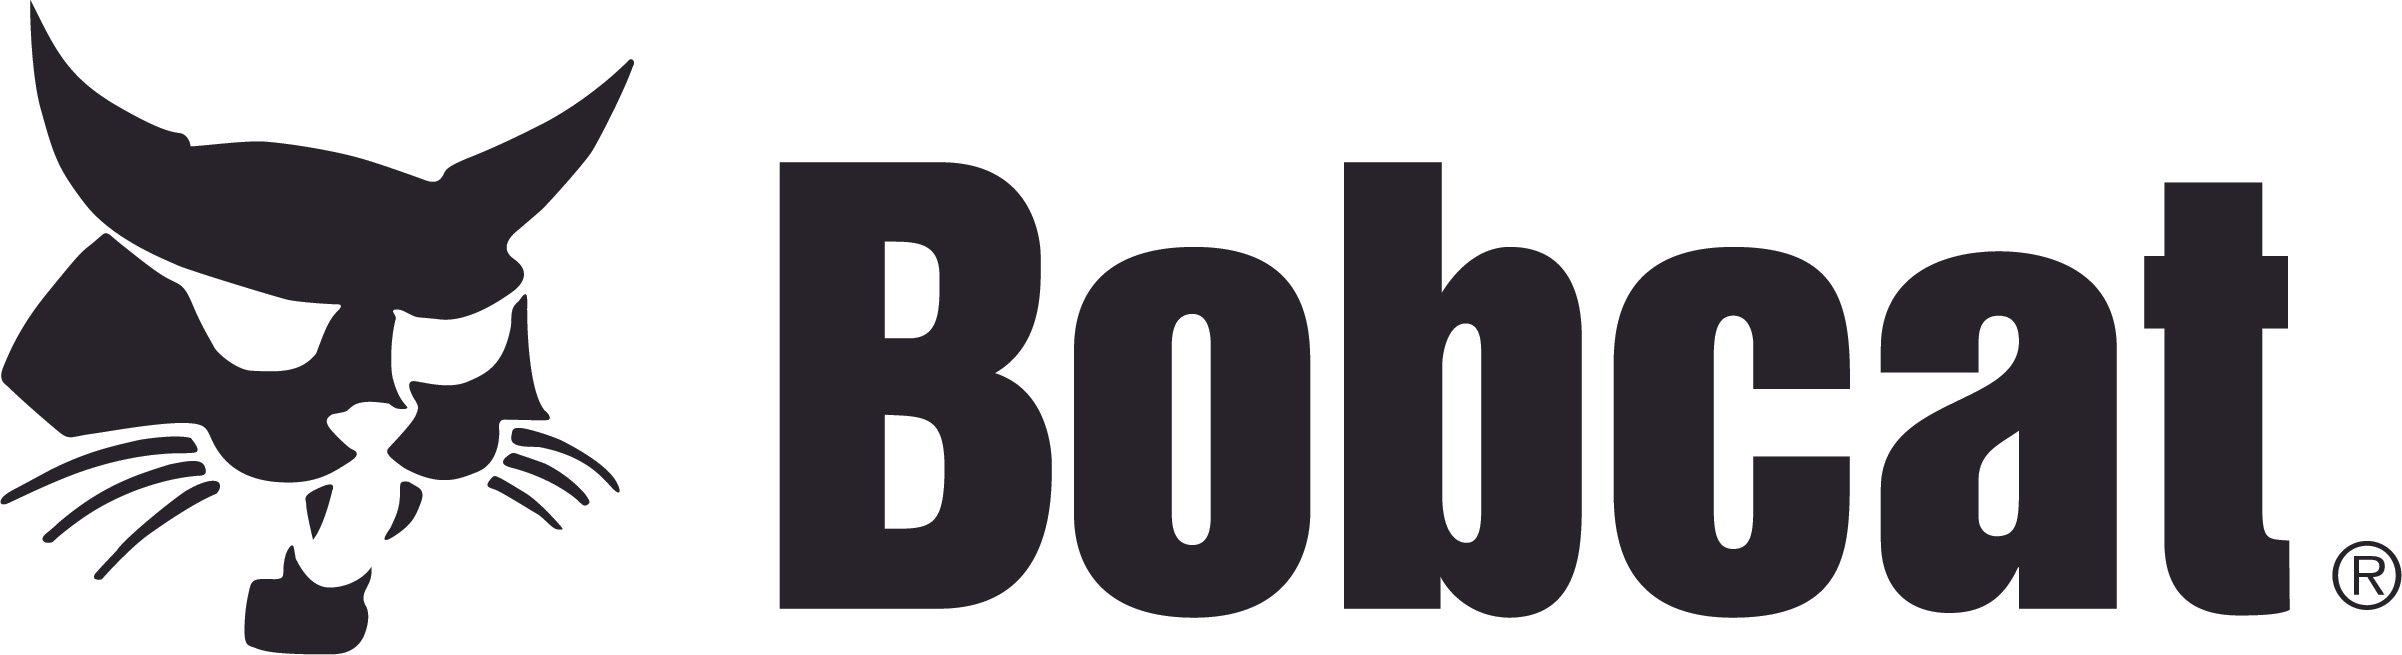 bobcat_logo_black.jpg